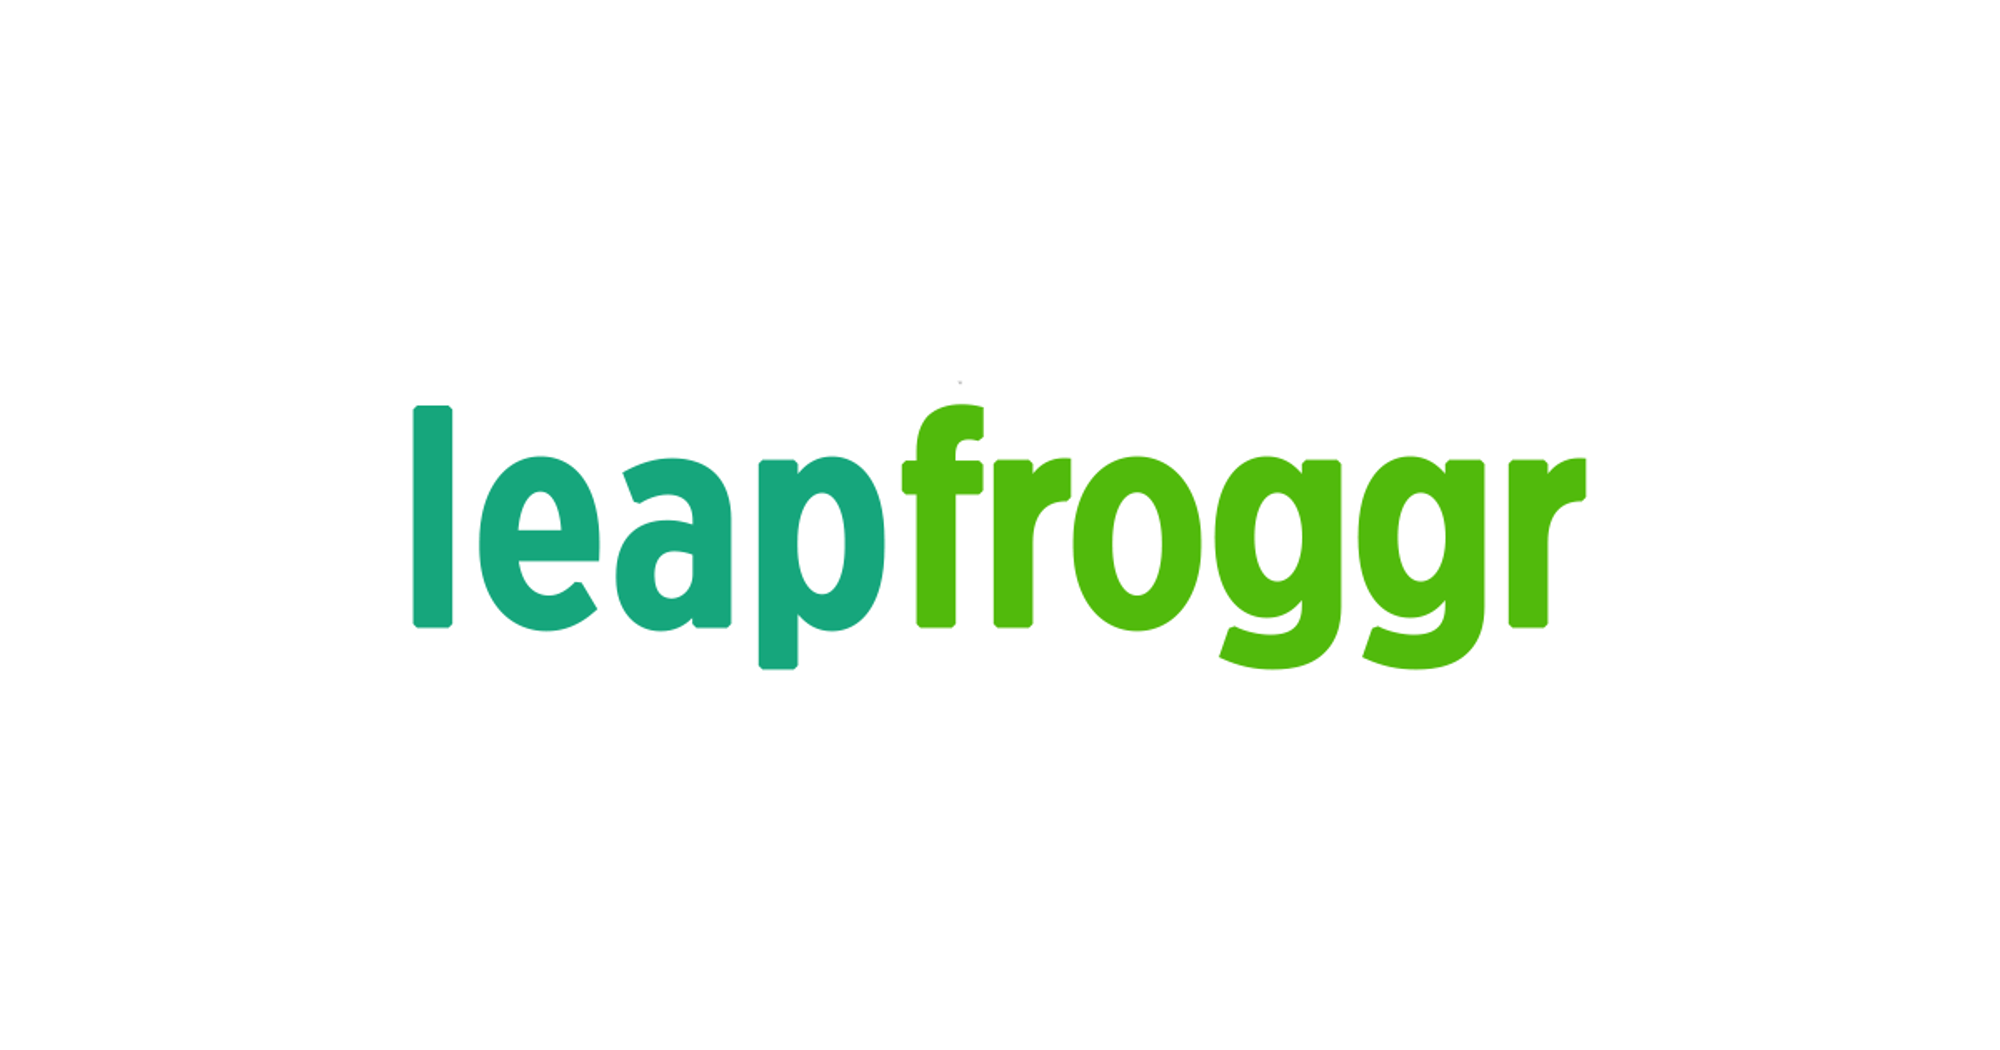 App and Web App Quality Assurance (QA) at LeapFroggr Inc.